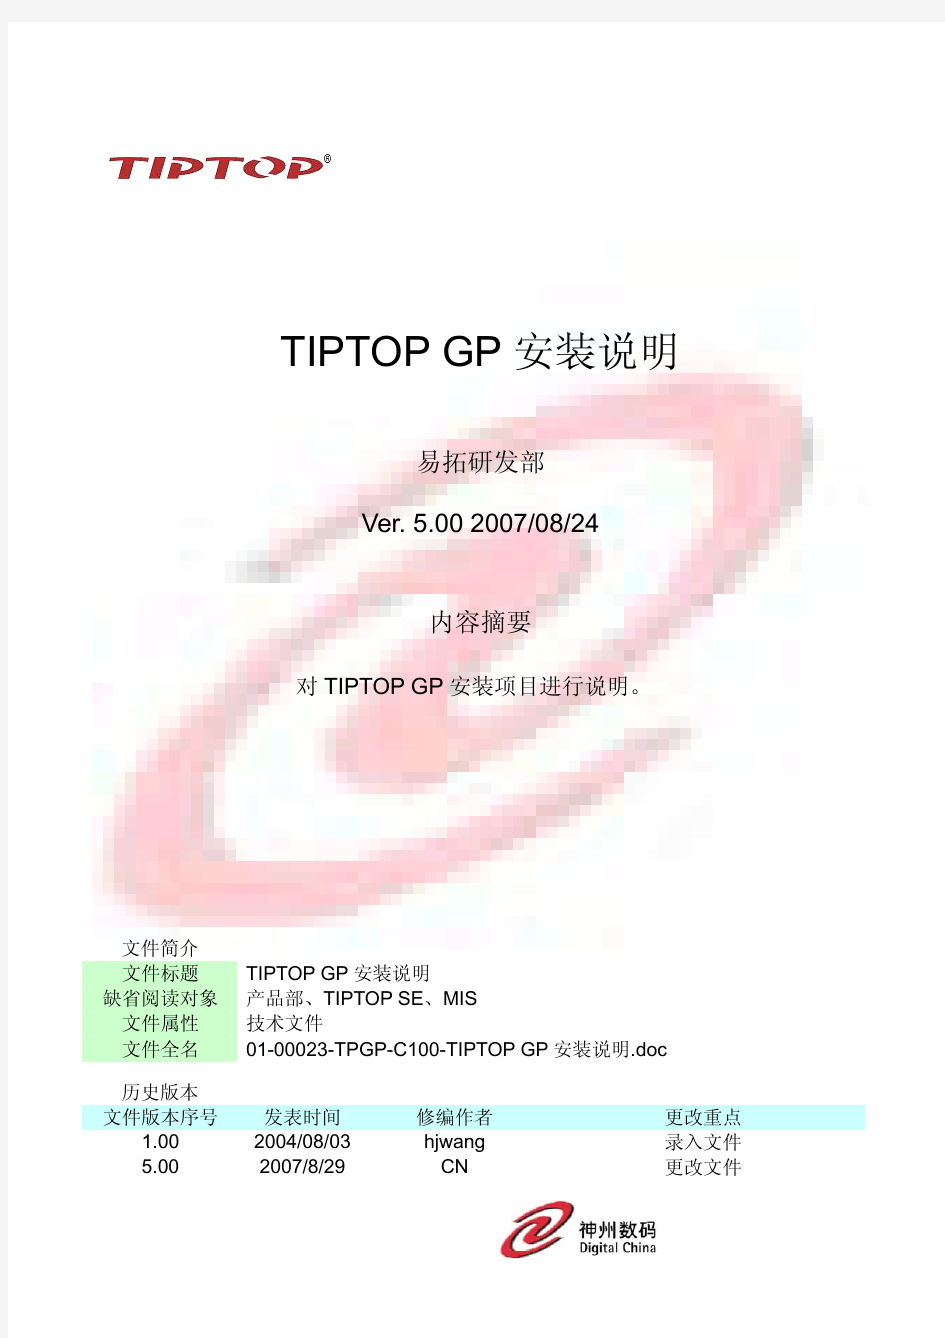 TPGP-C100-TIPTOP GP安装说明